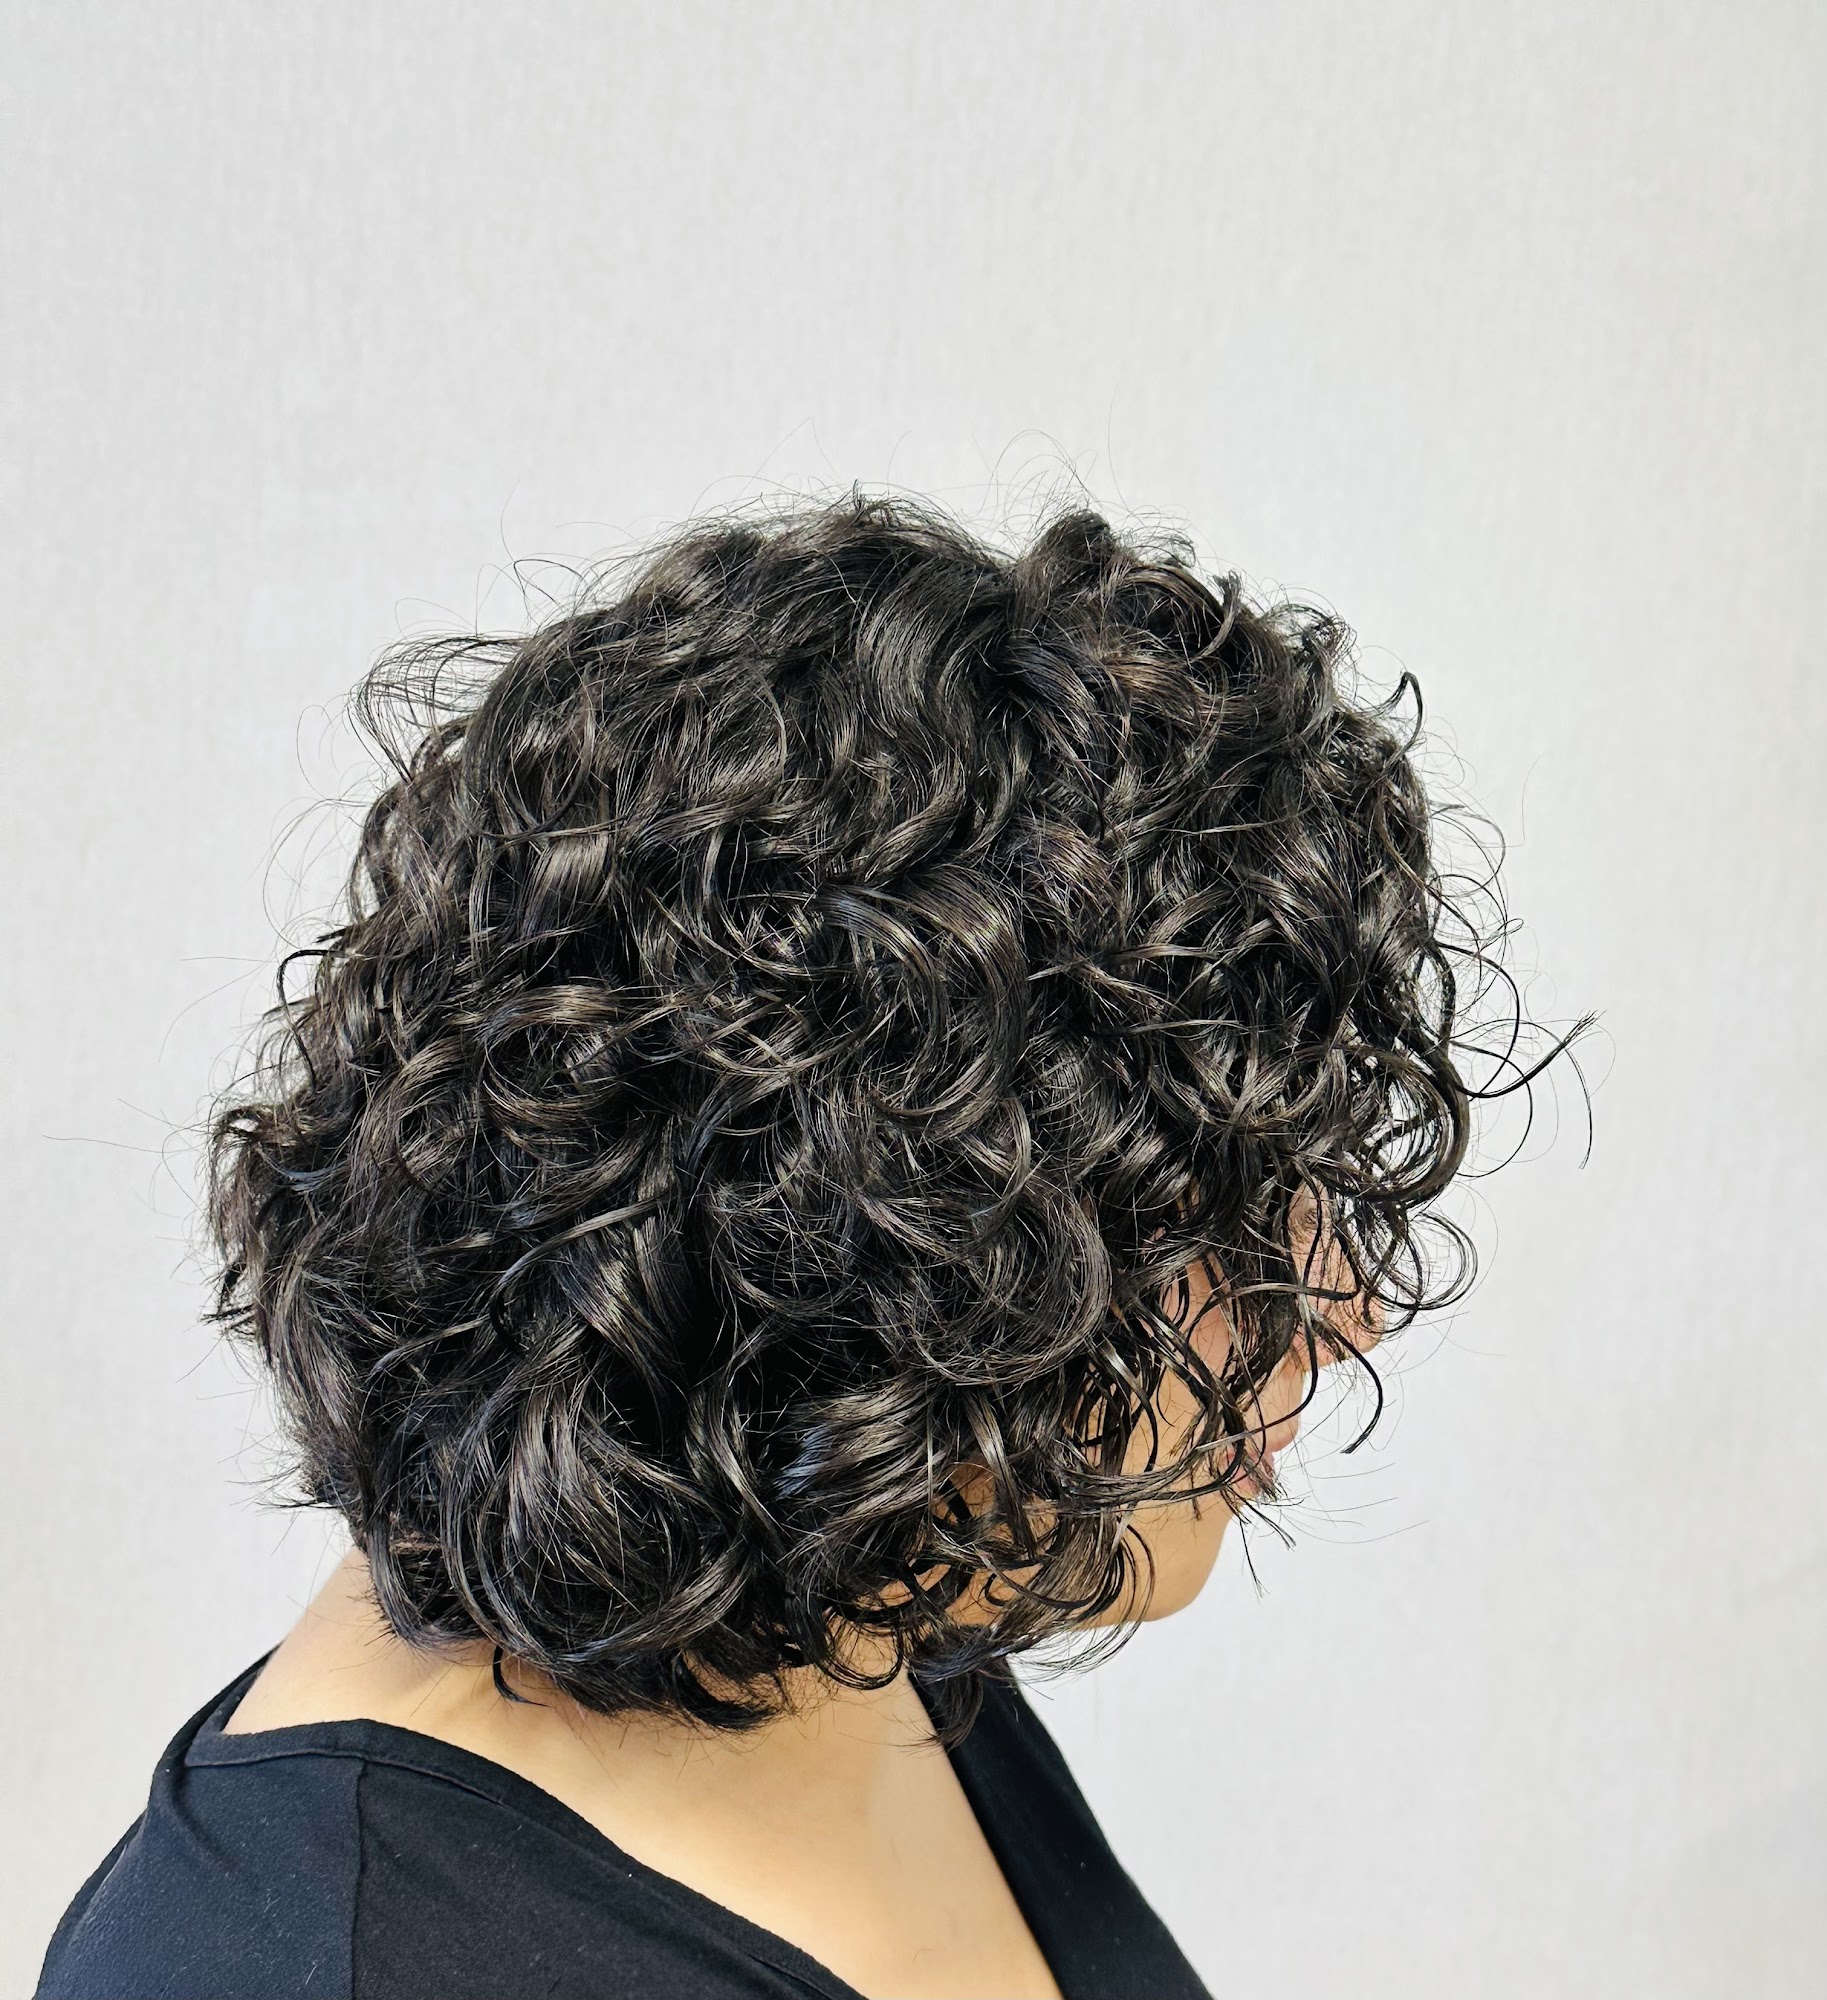 Simply Amber Curly Hair Salon - Crestview, FL